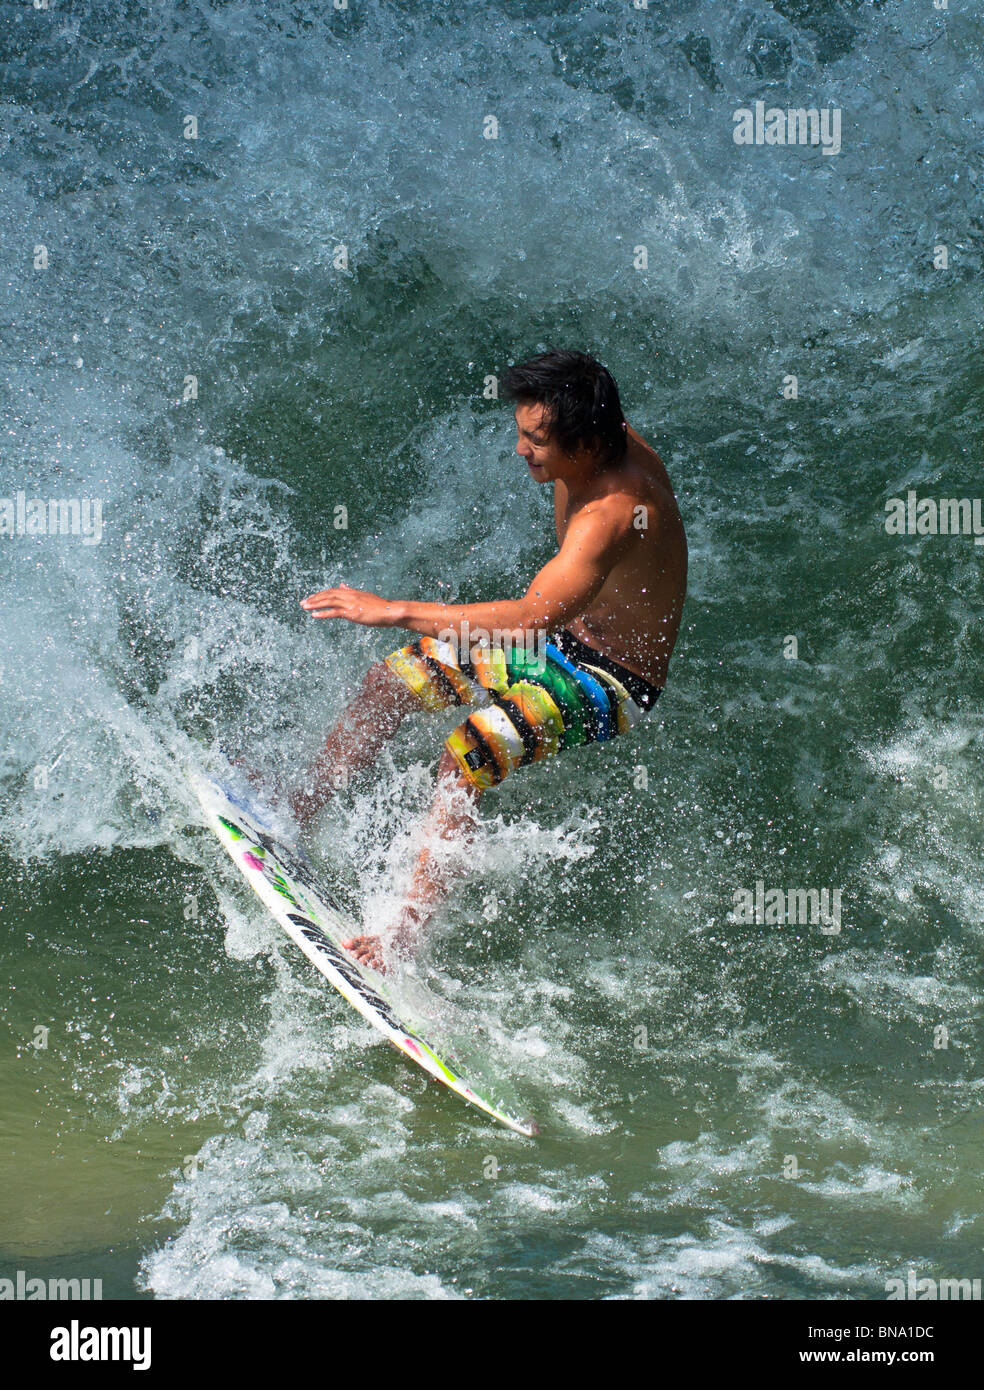 Surfer losing it! Stock Photo